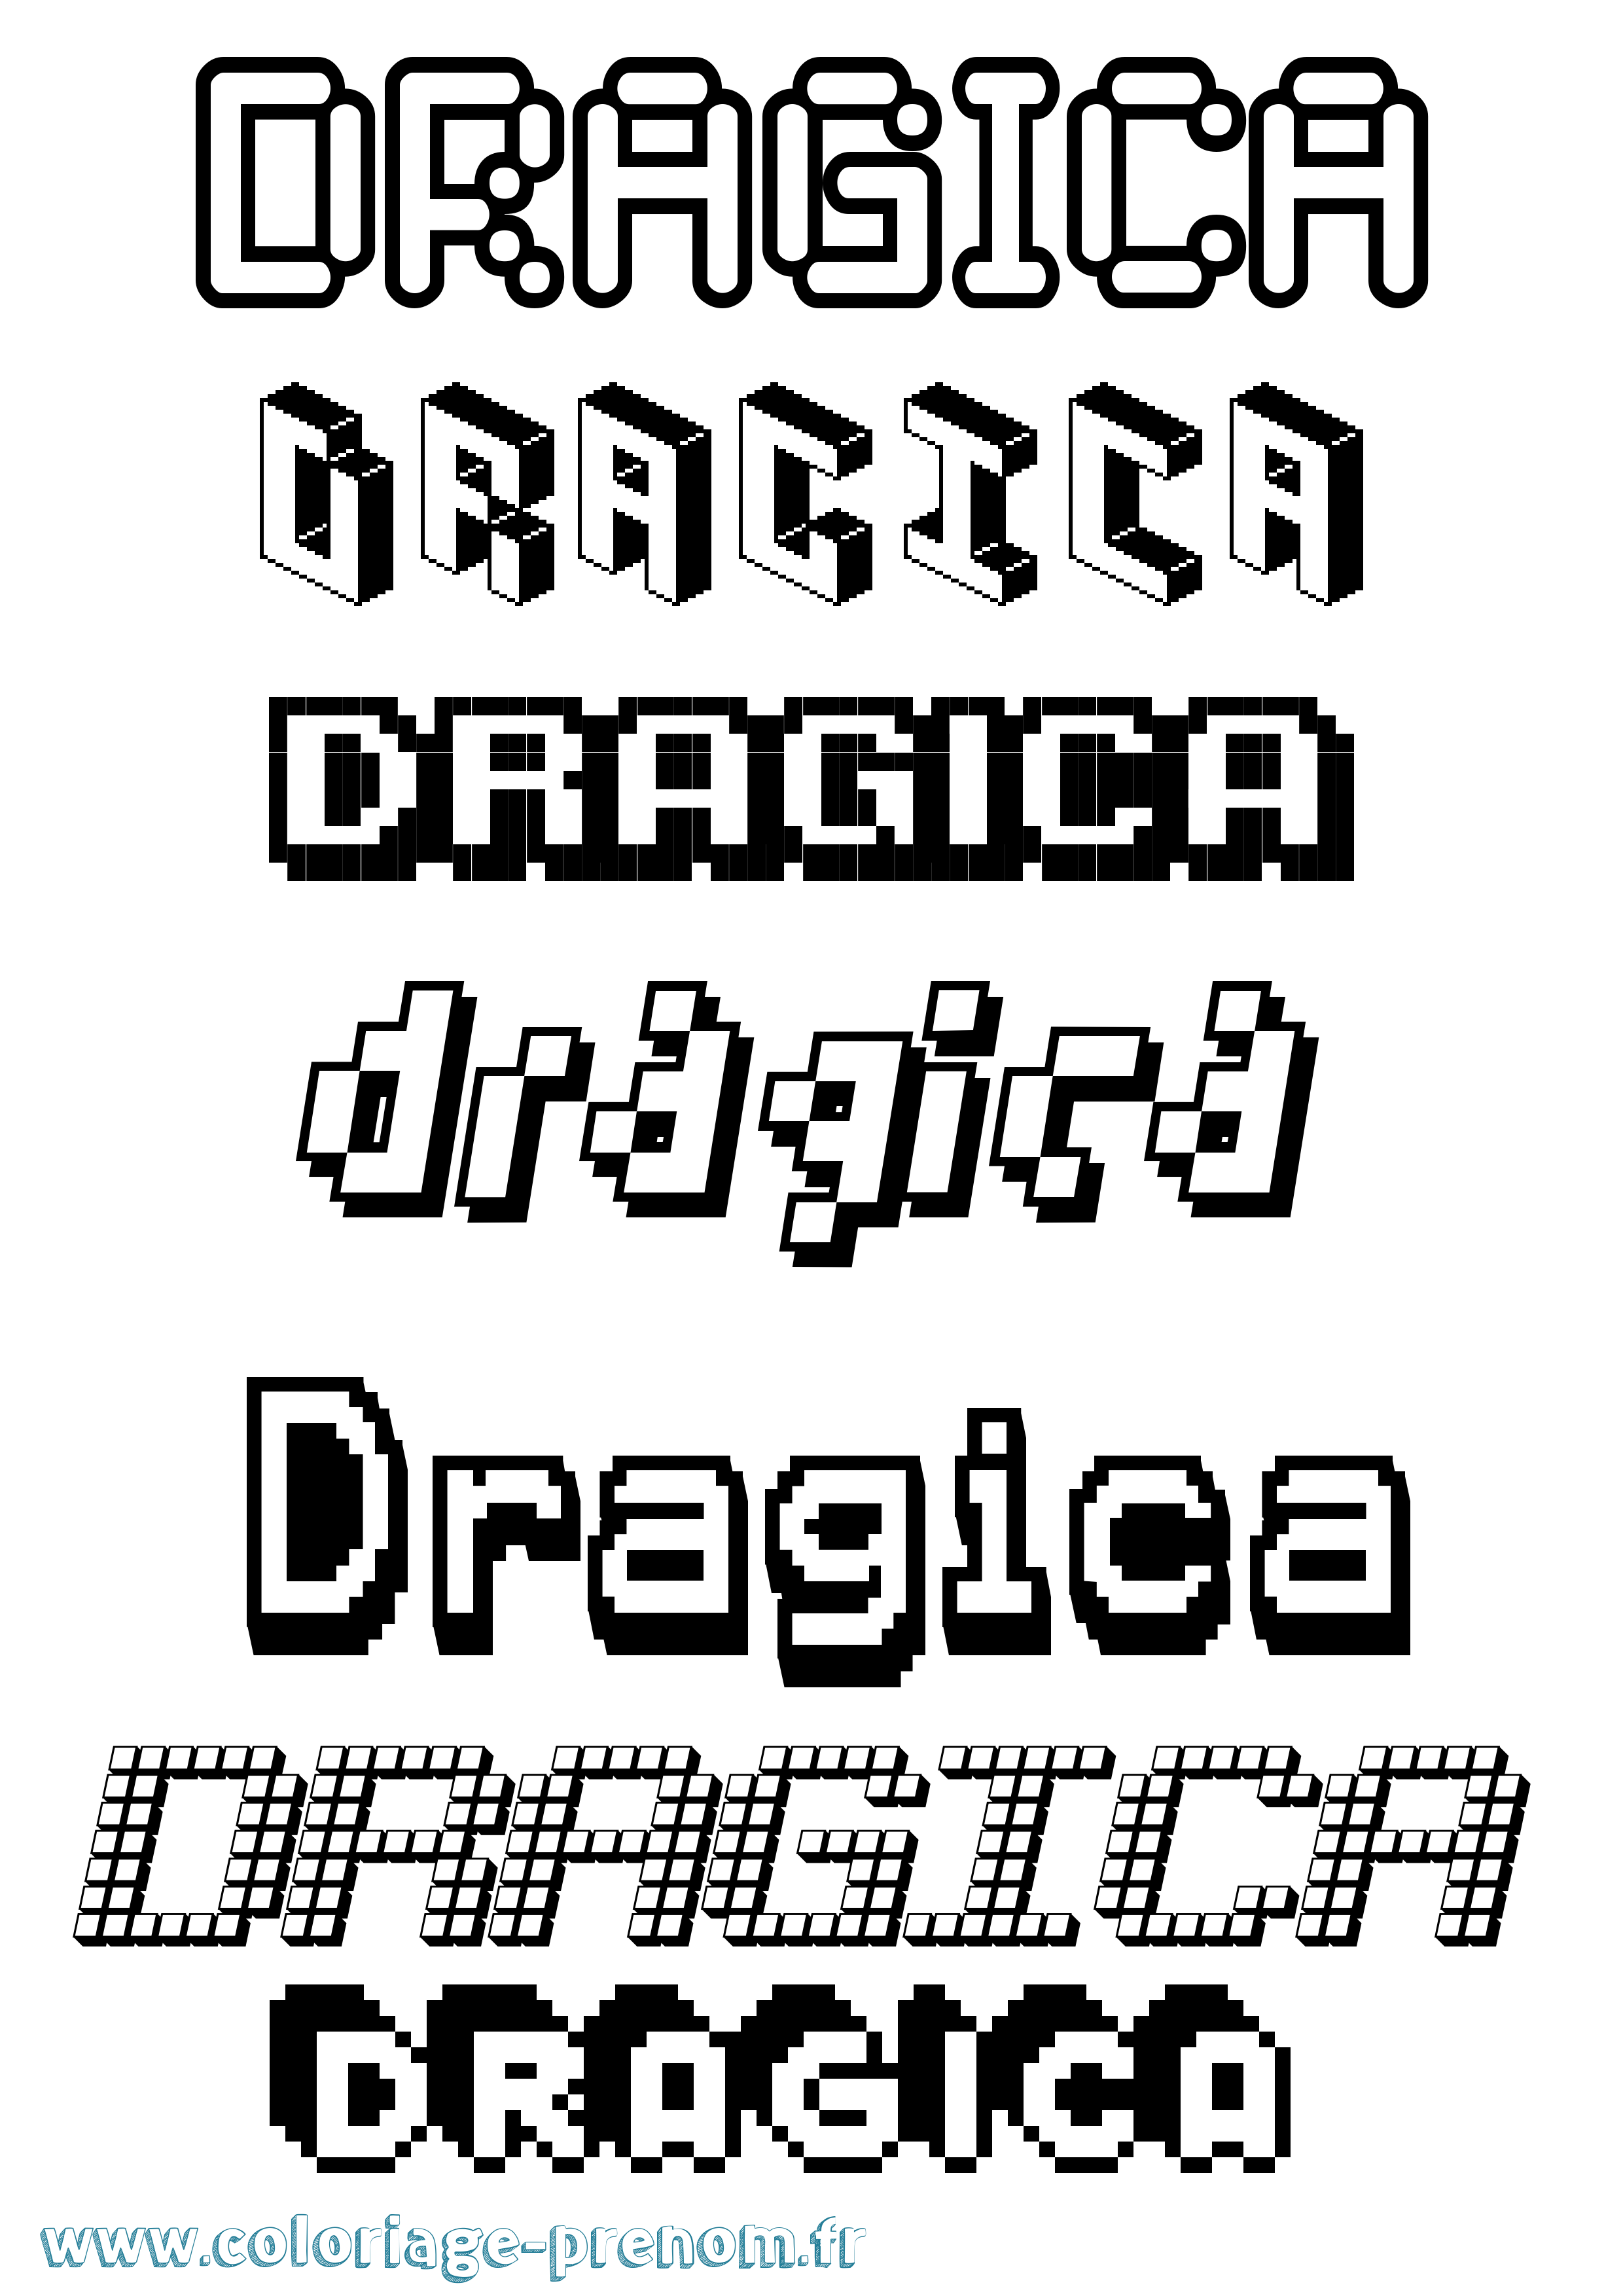 Coloriage prénom Dragica Pixel